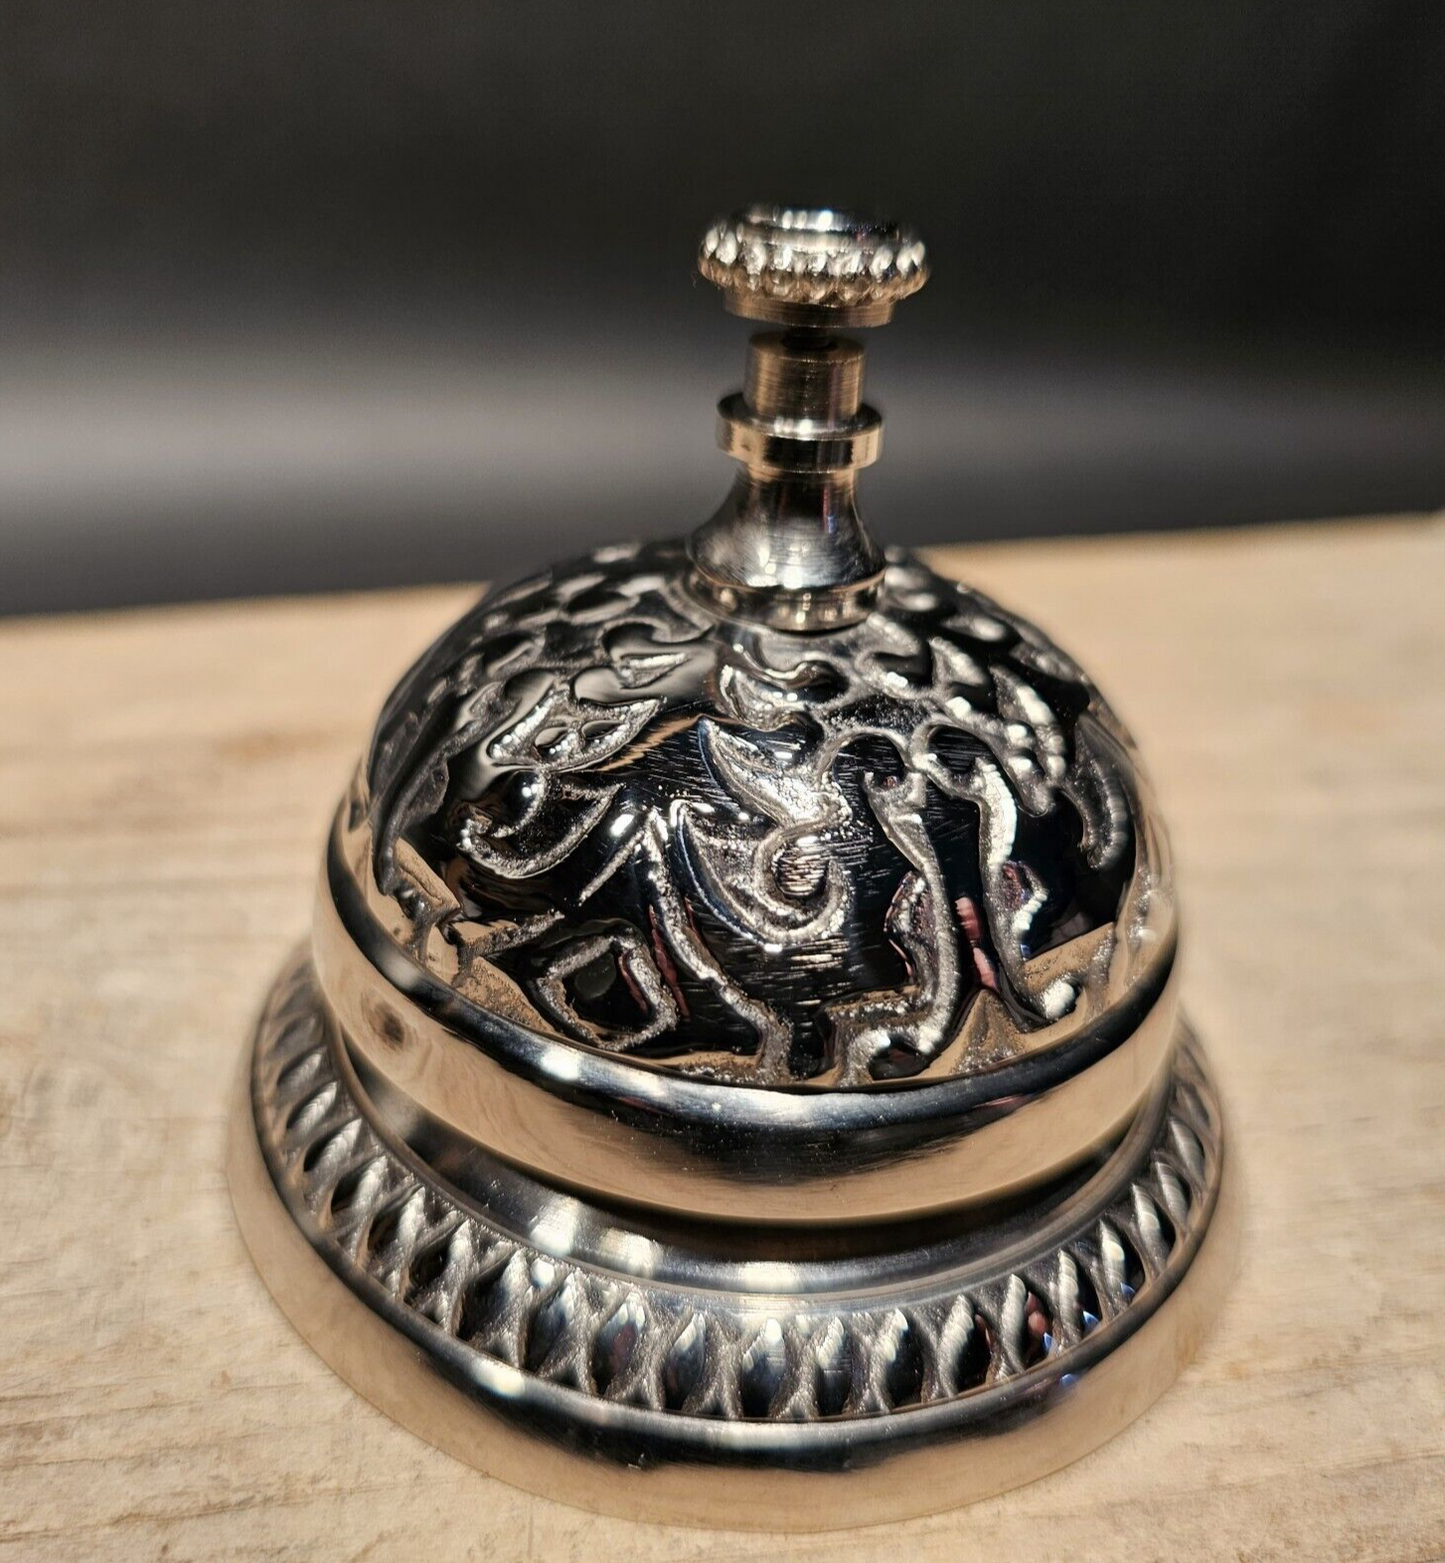 3 1/4" Antique Vintage Style Ornate Silver Brass Table Desk Bell